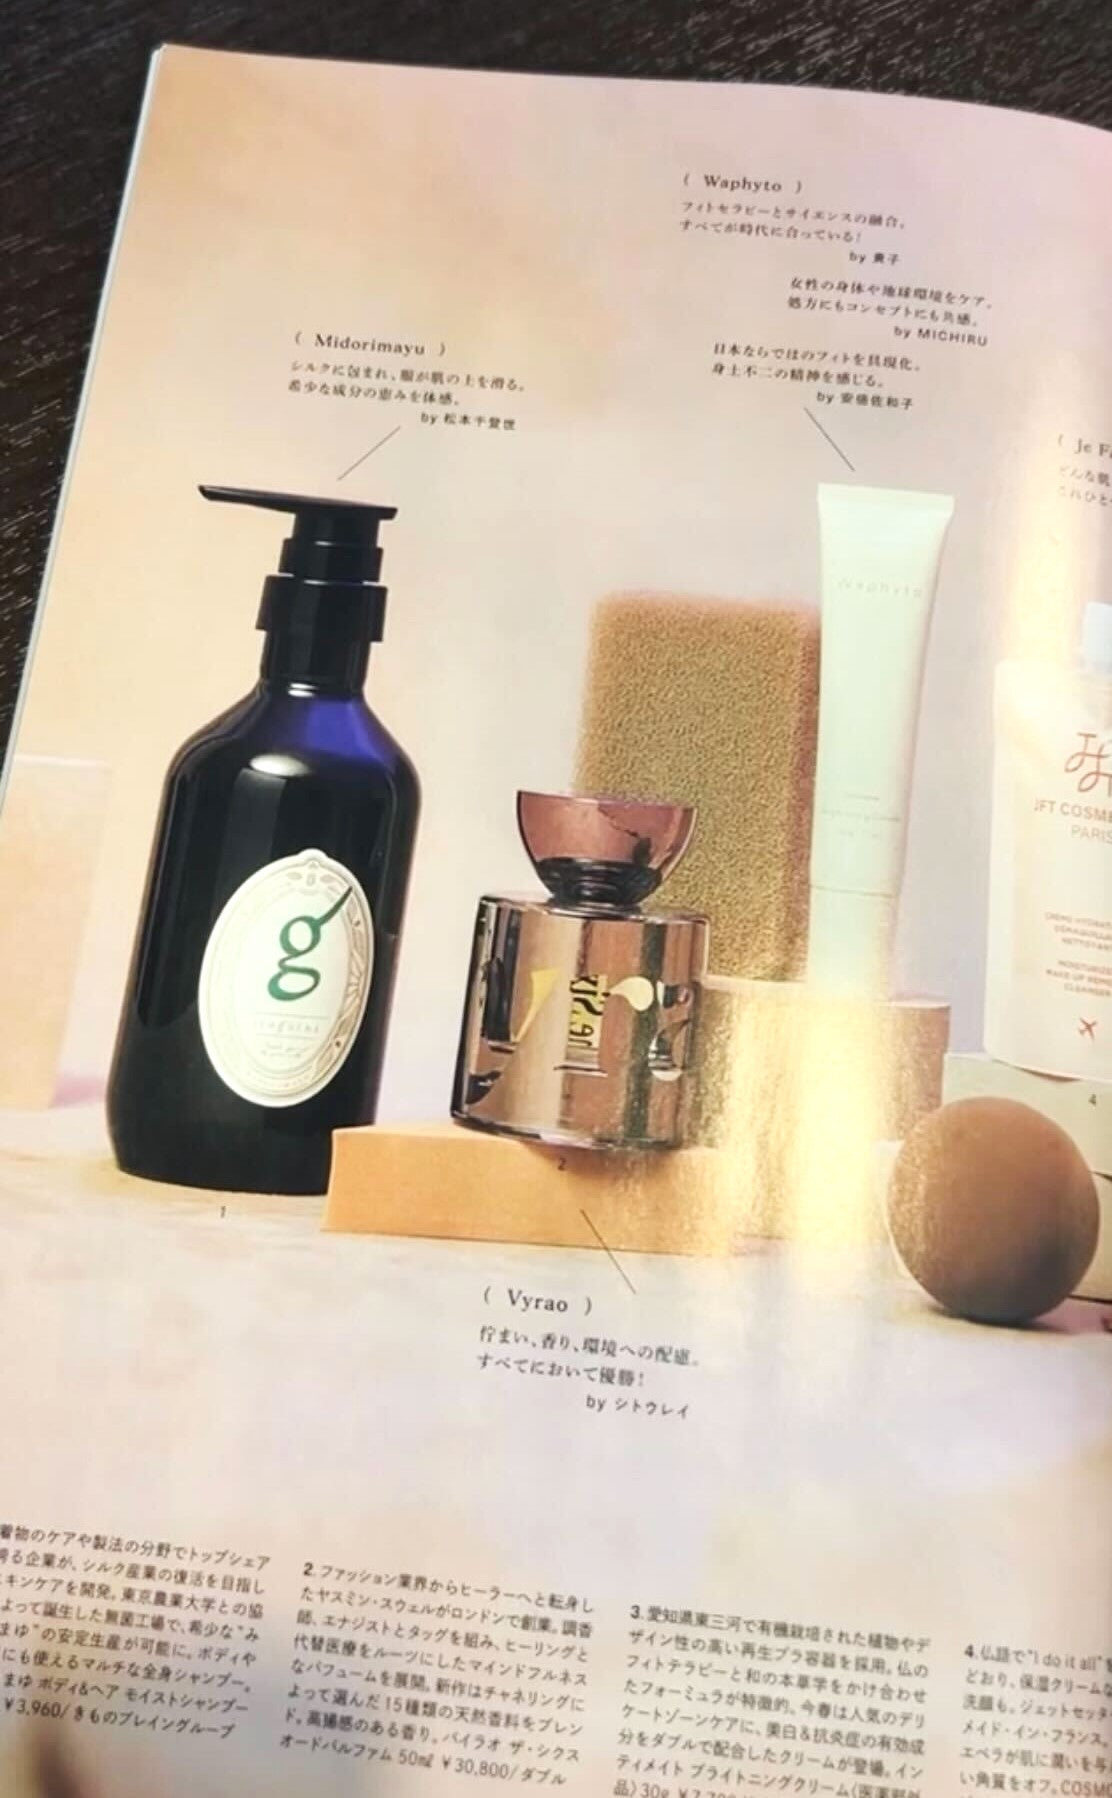 Itoguchi 『みどりまゆ BODY & HAIR モイストシャンプー』が、雑誌